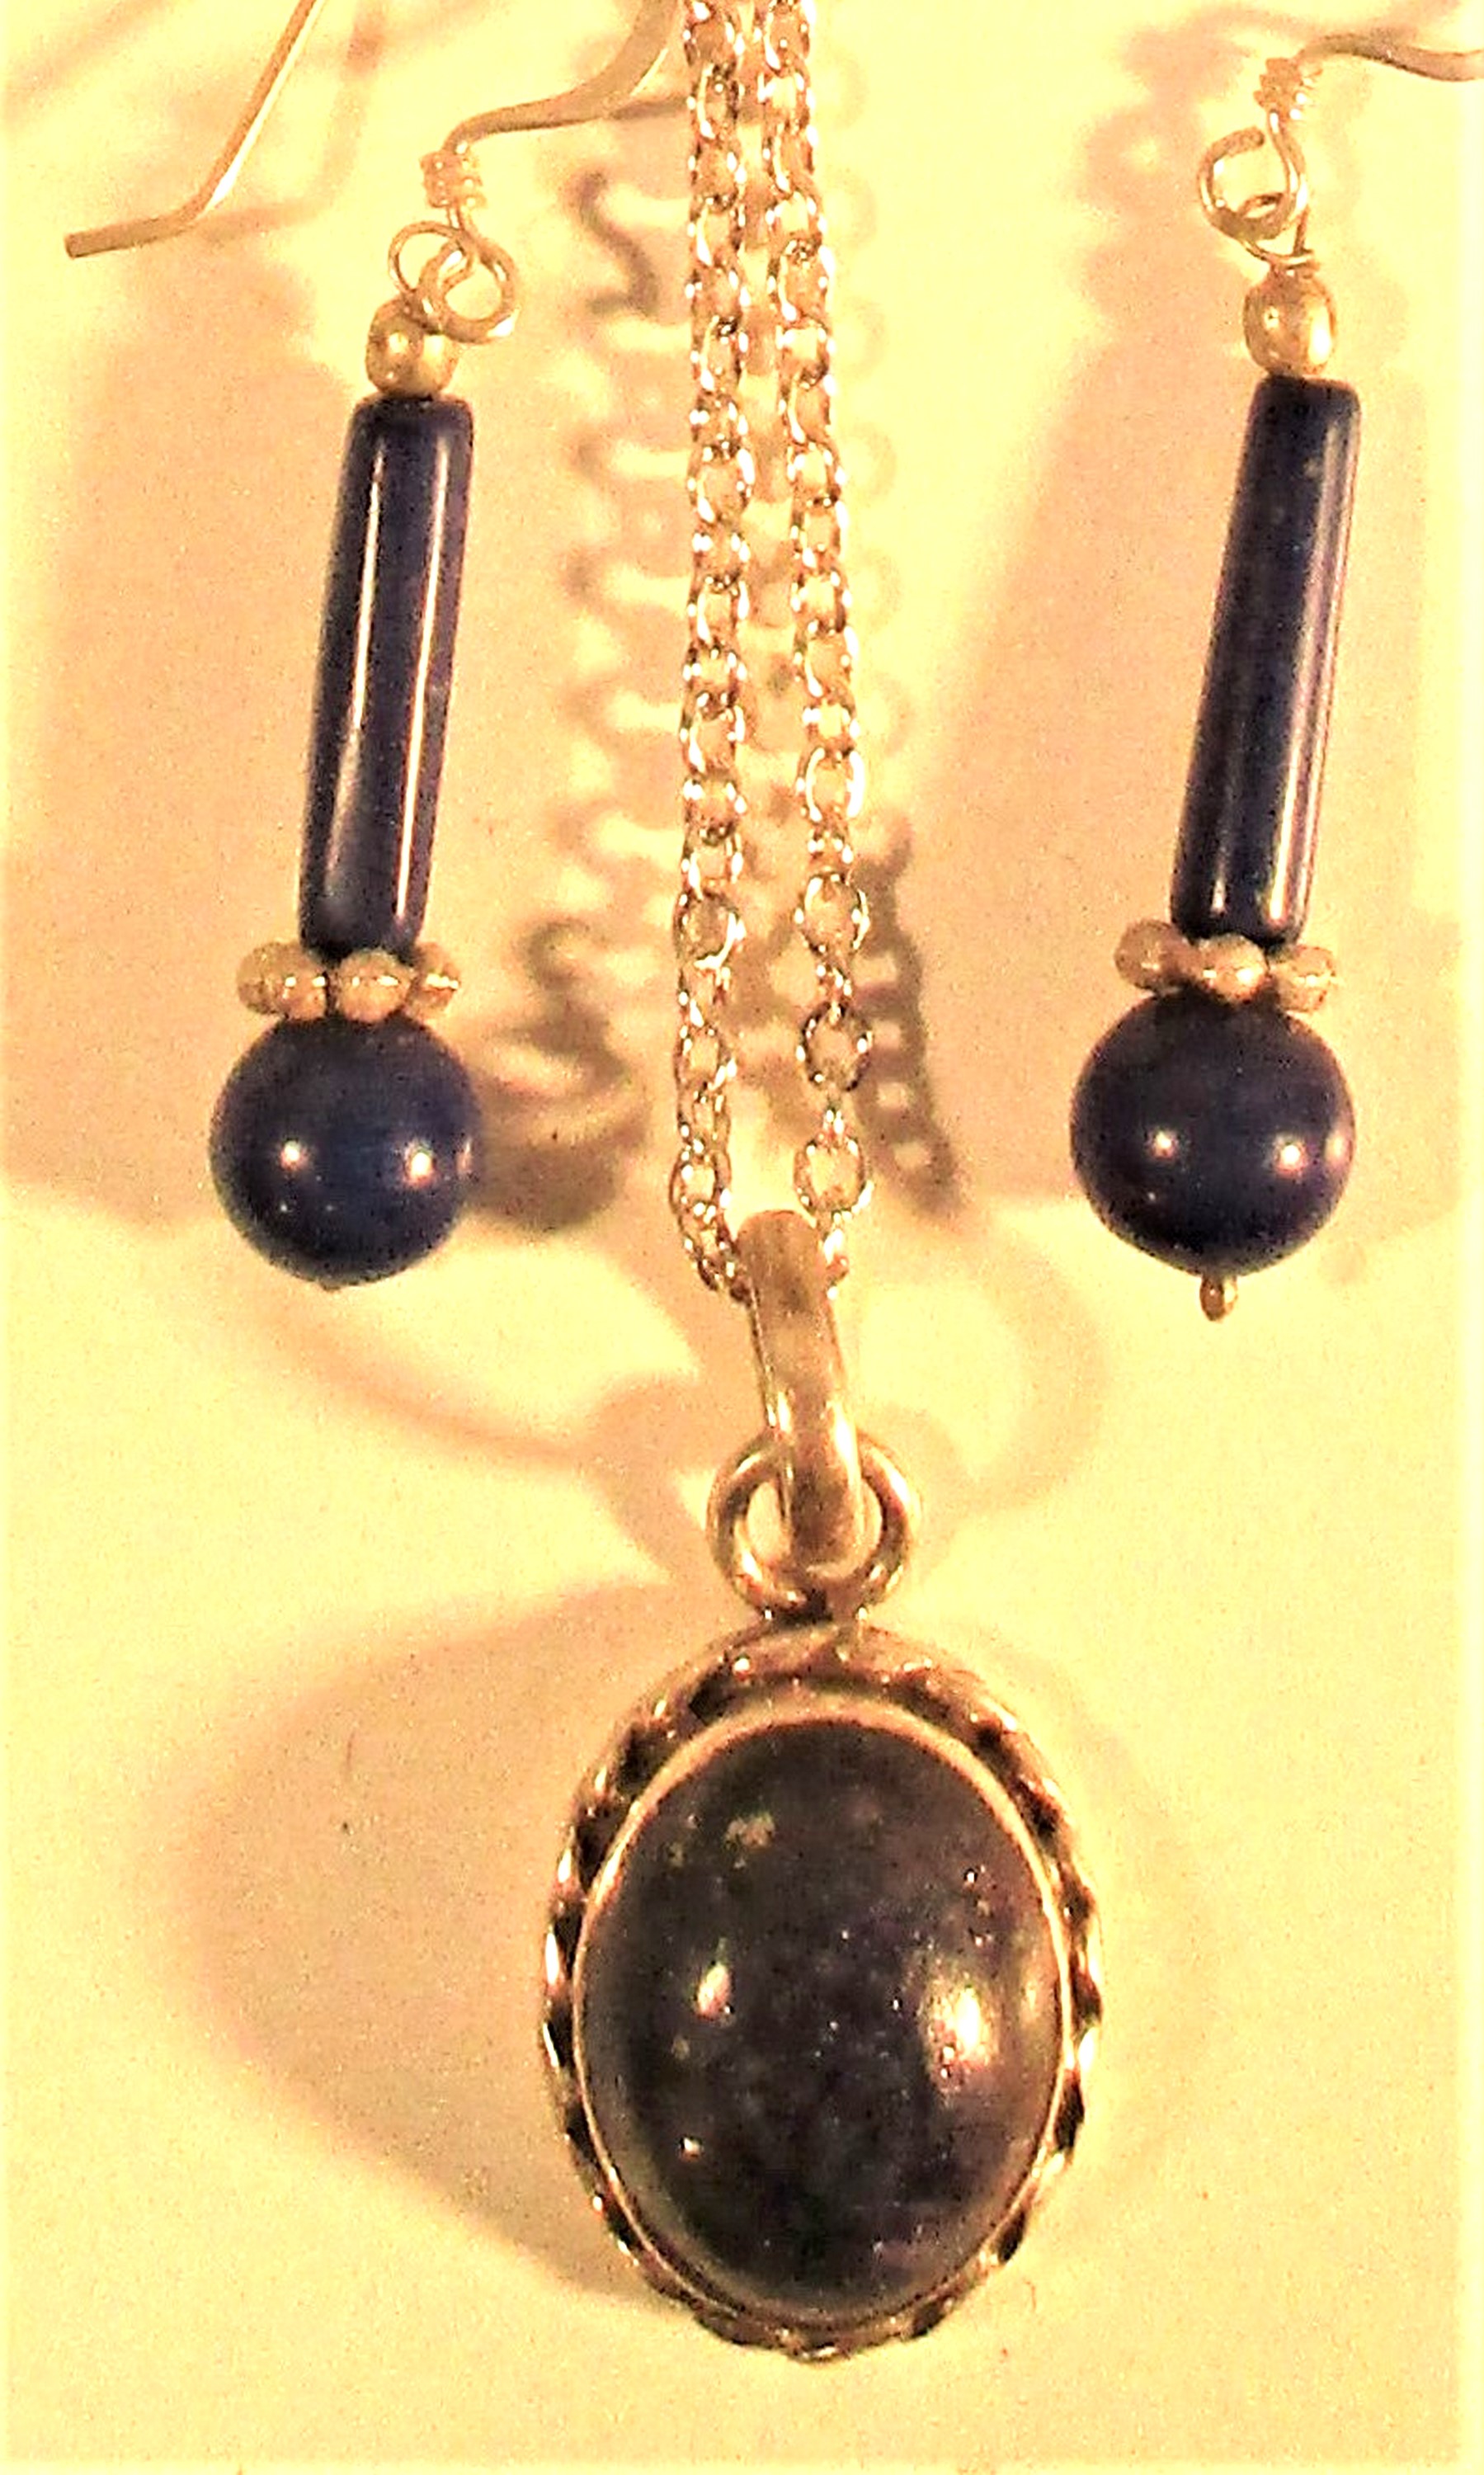 Lapis lazuli pendant set in white metal and pair of earrings - Image 2 of 2